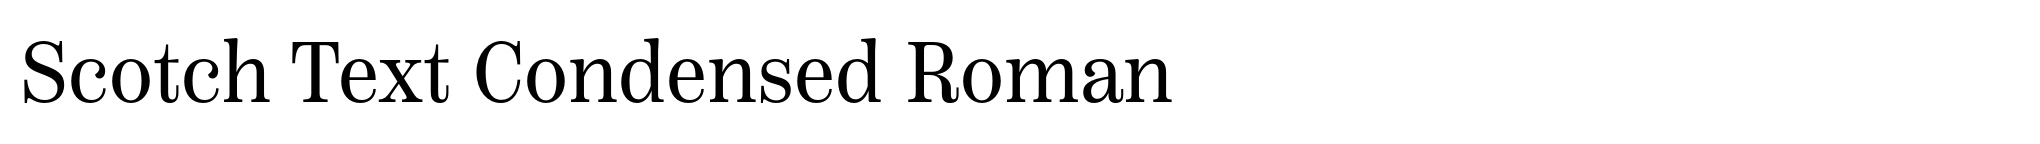 Scotch Text Condensed Roman image